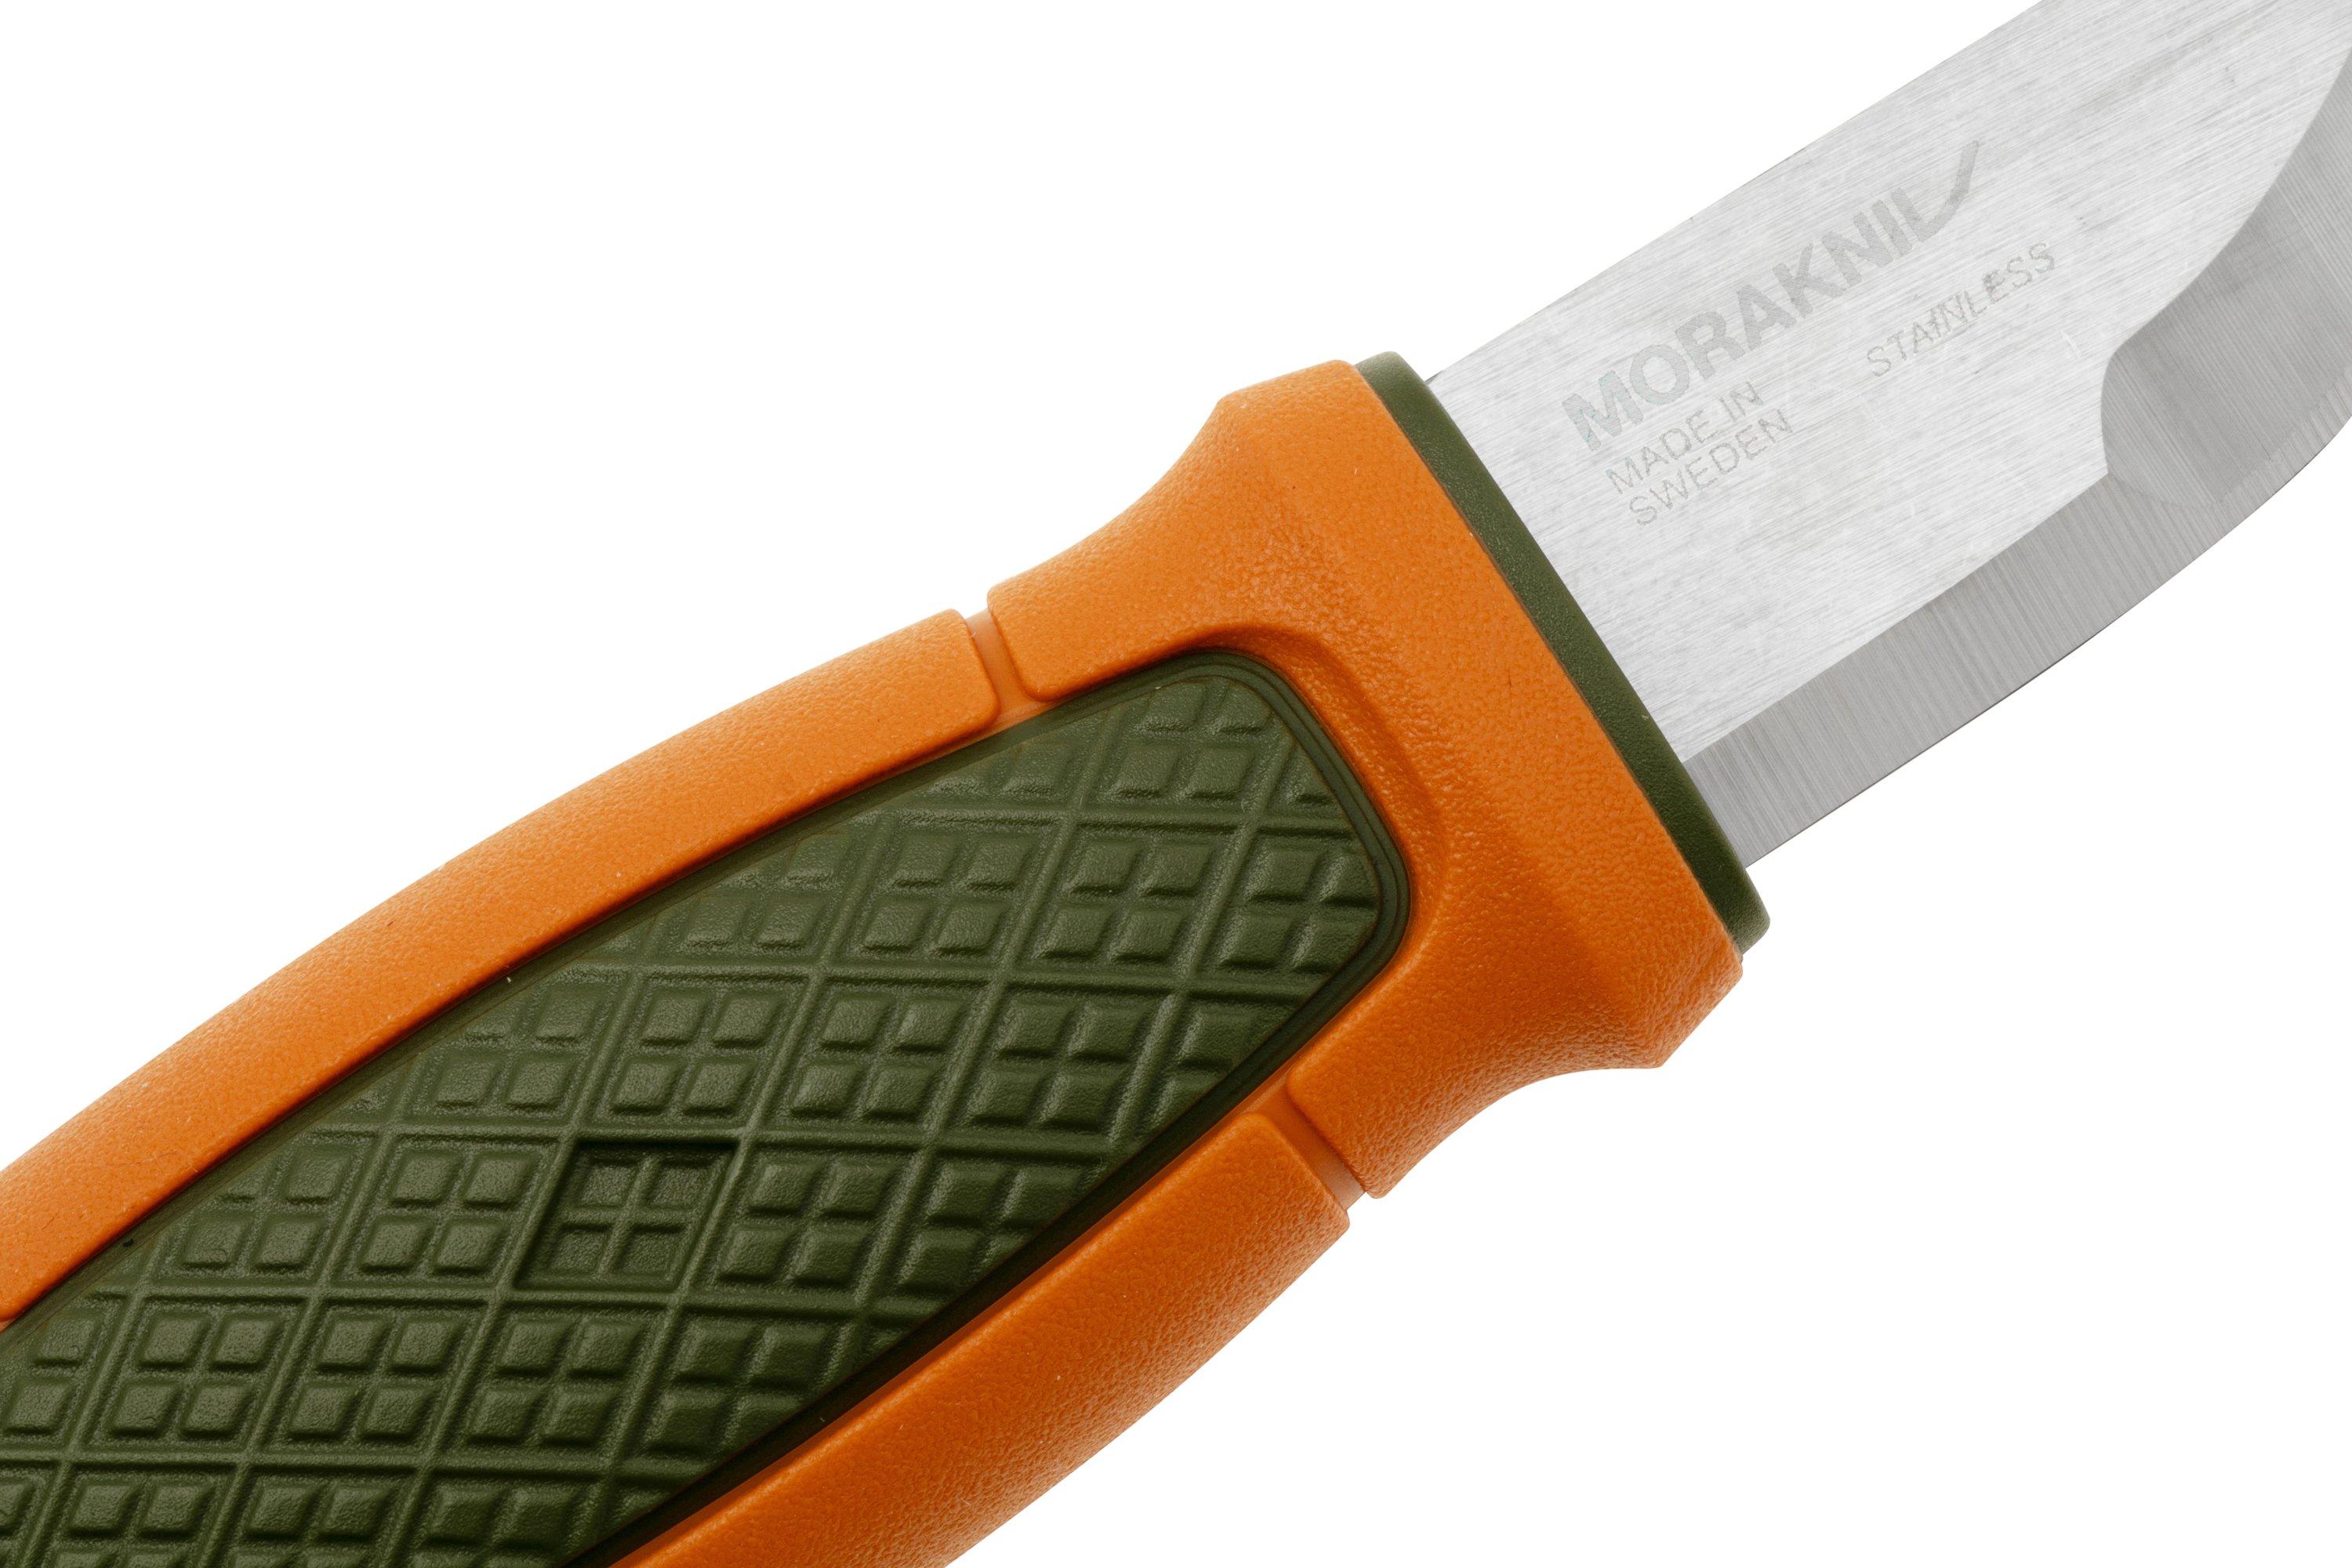 Mora Eldris Hunting 14237 Green Orange, neck knife for hunting, includes  sheath and belt loop